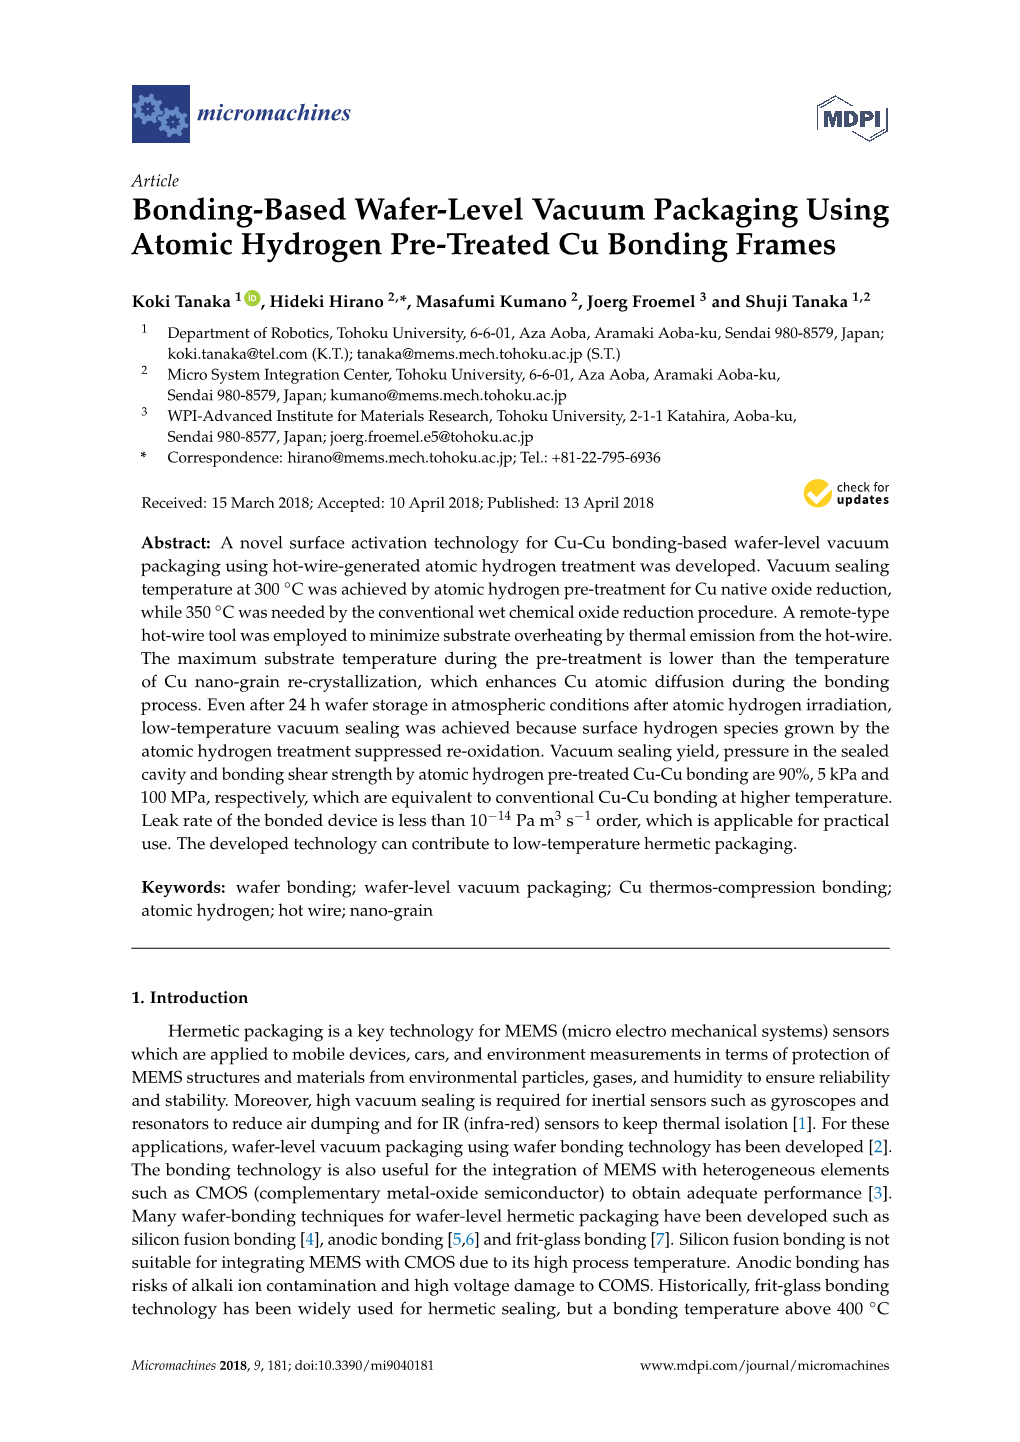 Bonding-Based Wafer-Level Vacuum Packaging Using Atomic Hydrogen Pre-Treated Cu Bonding Frames